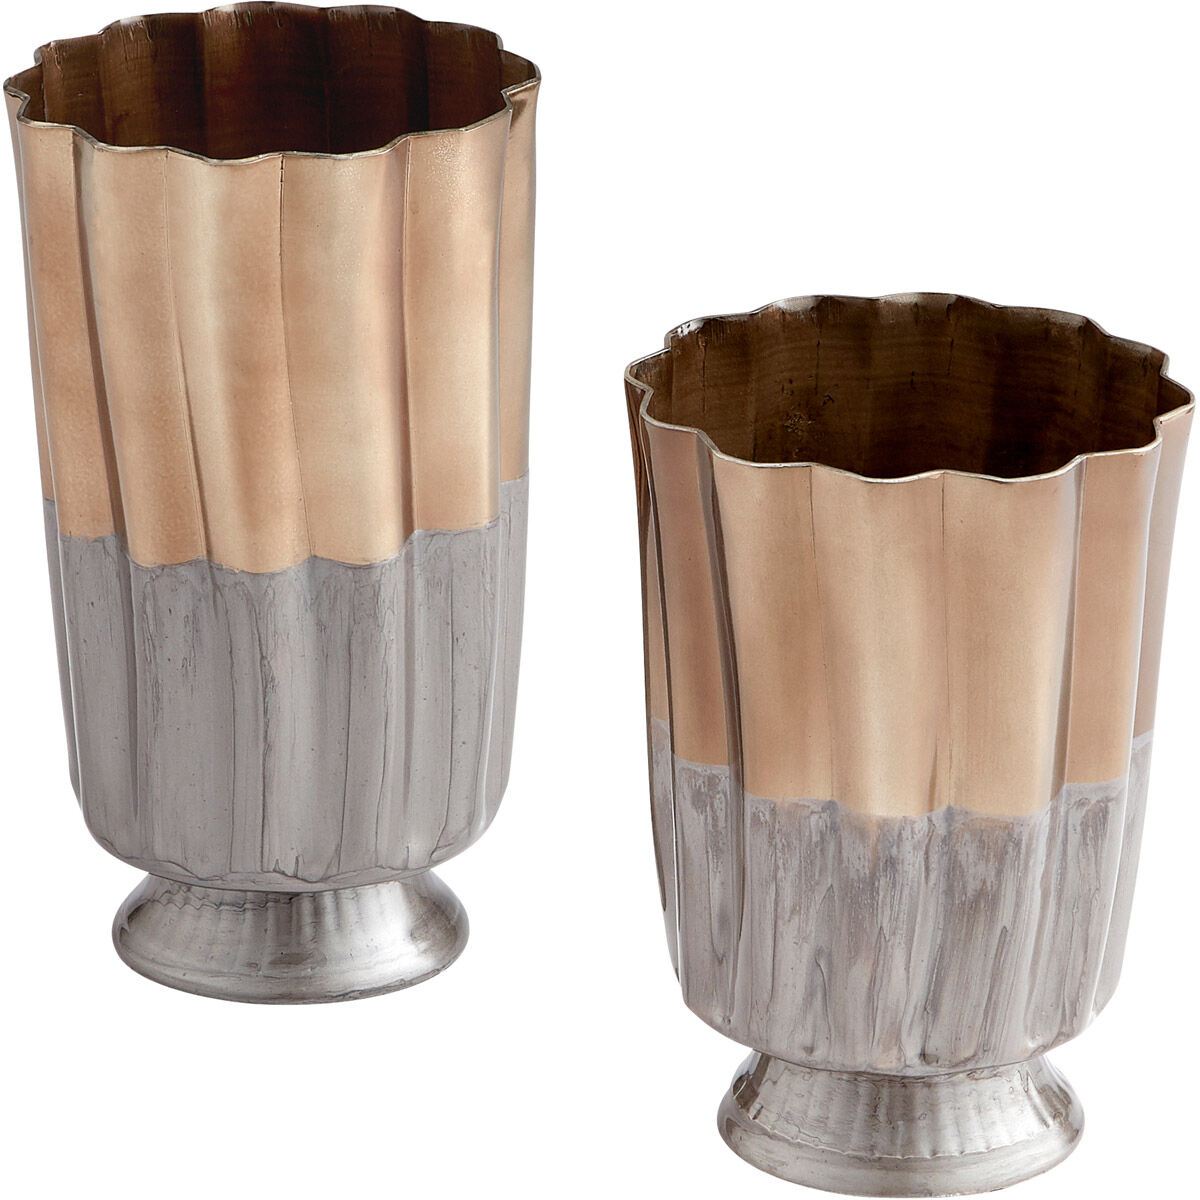 Cyan Design 10692 Tones 10 X 7 inch Vase